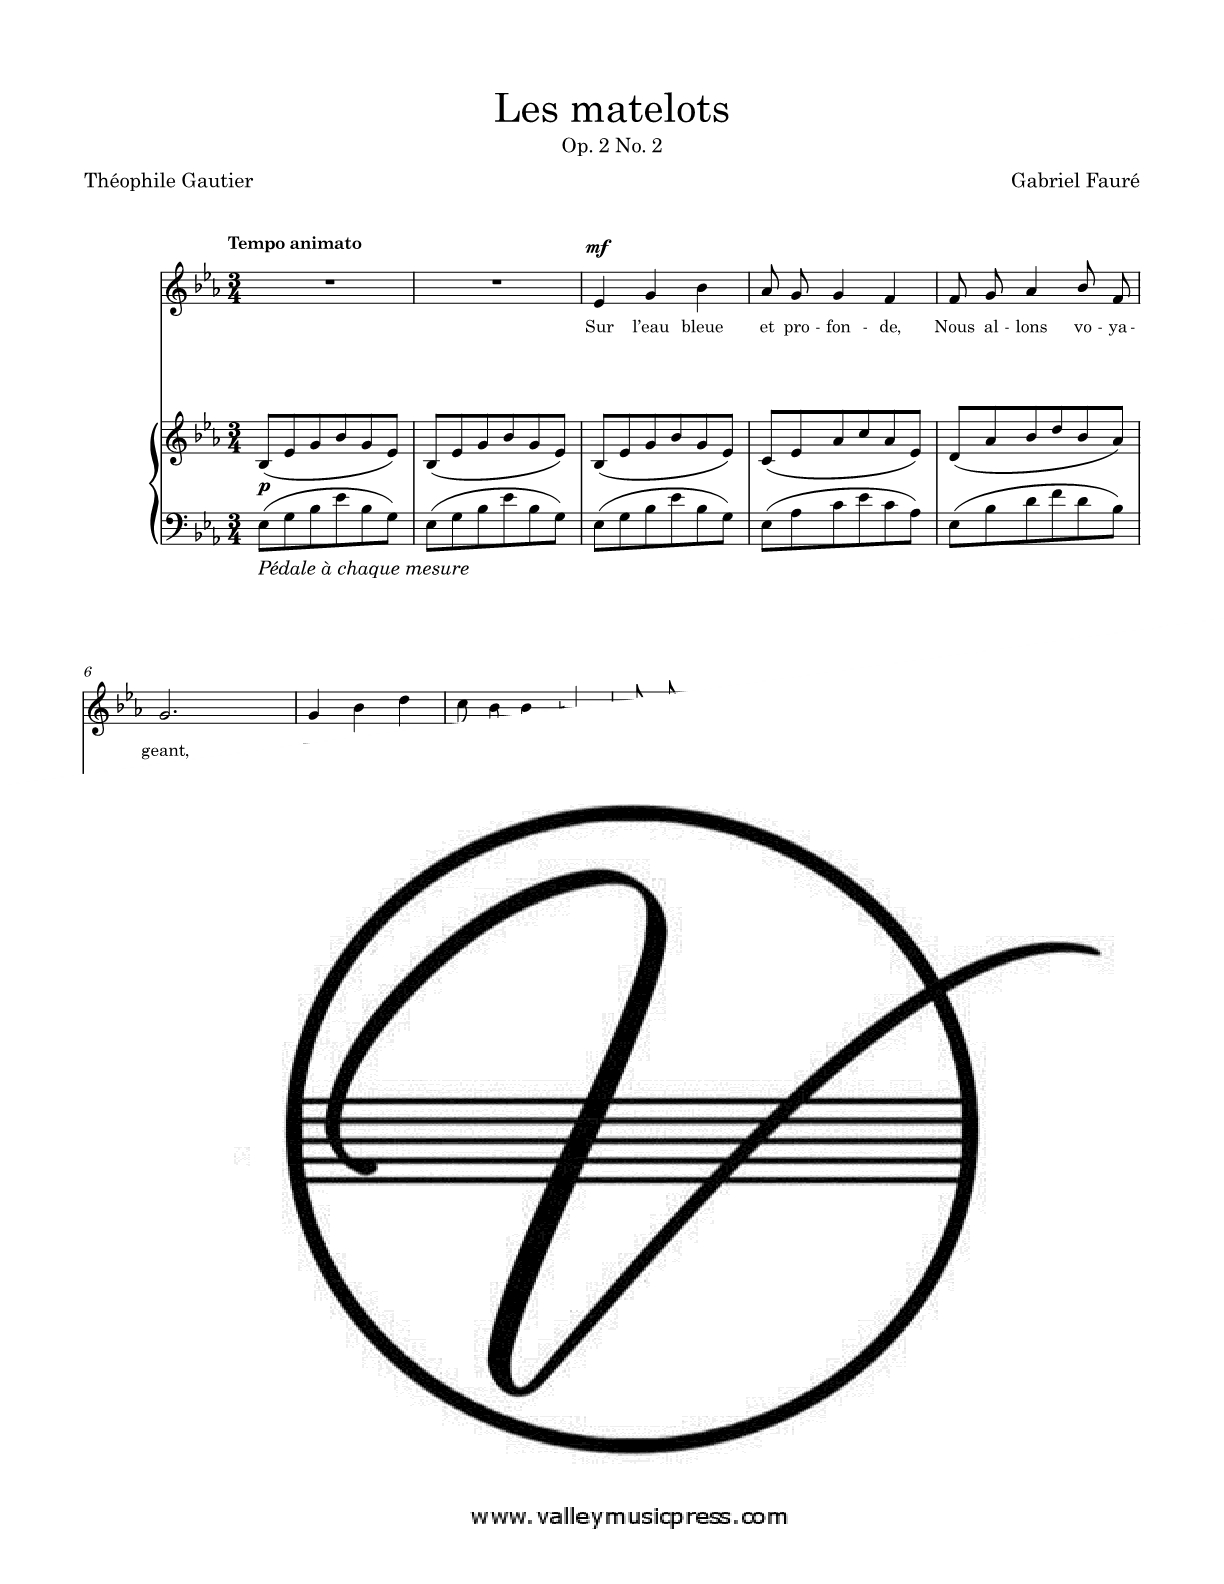 Faure - Les matelots Op. 2 No. 2 (Voice) - Click Image to Close